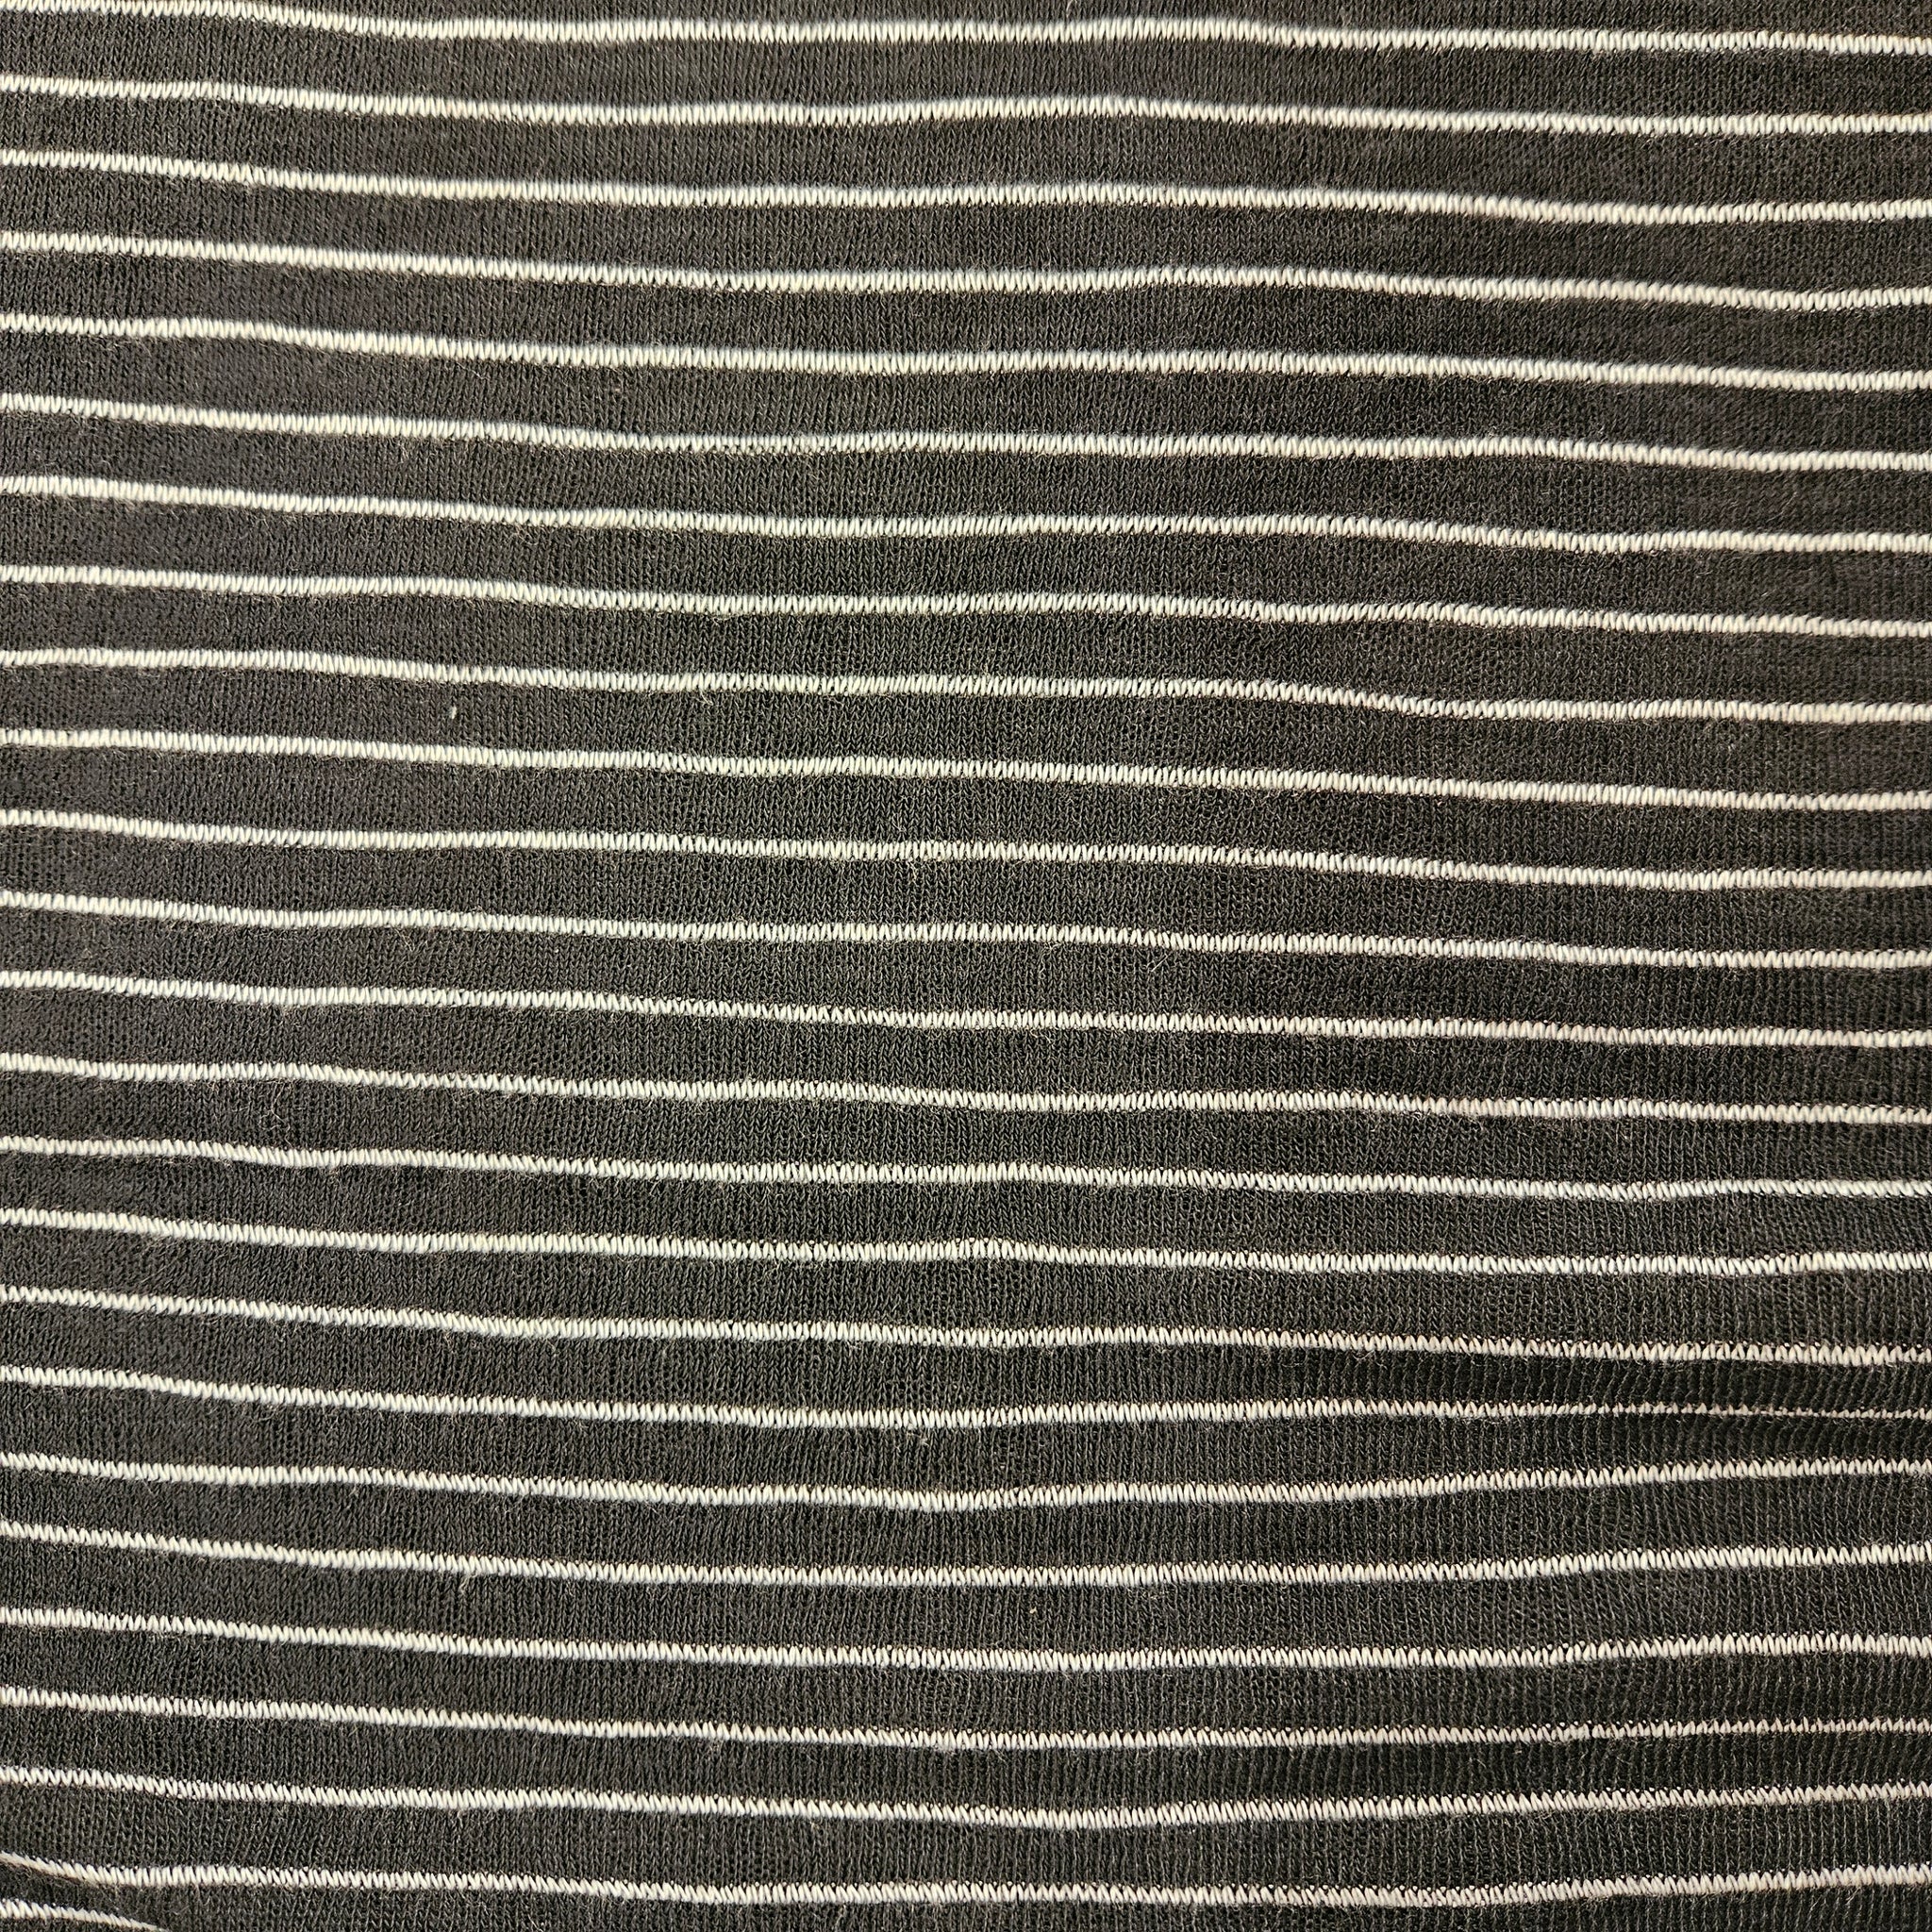 Striped Lightweight Sweater Knit